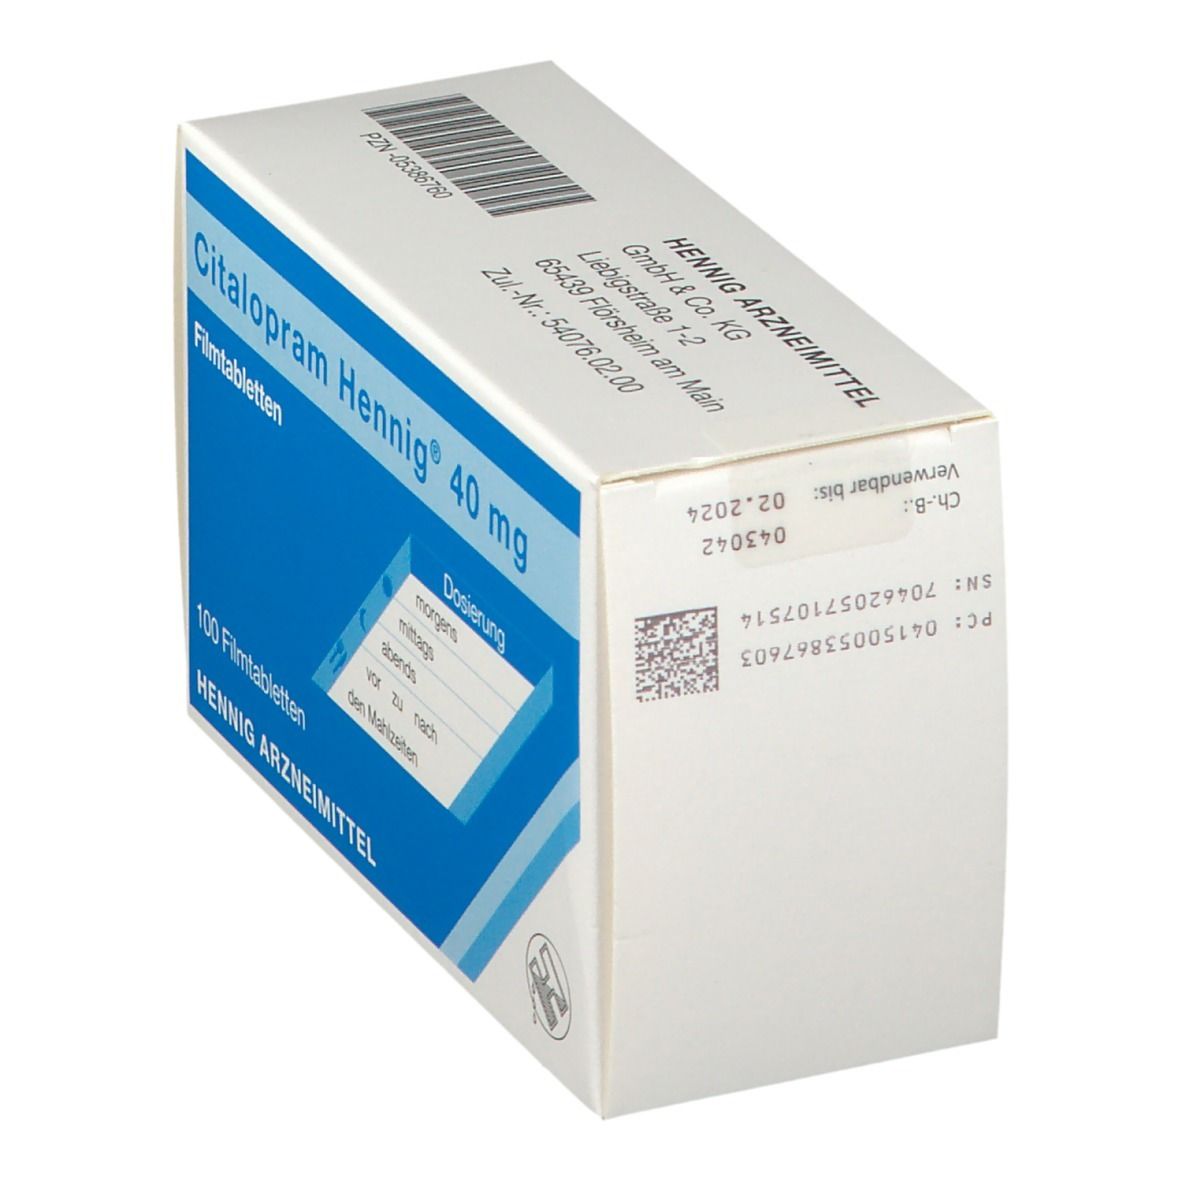 Citalopram Hennig® 40 mg